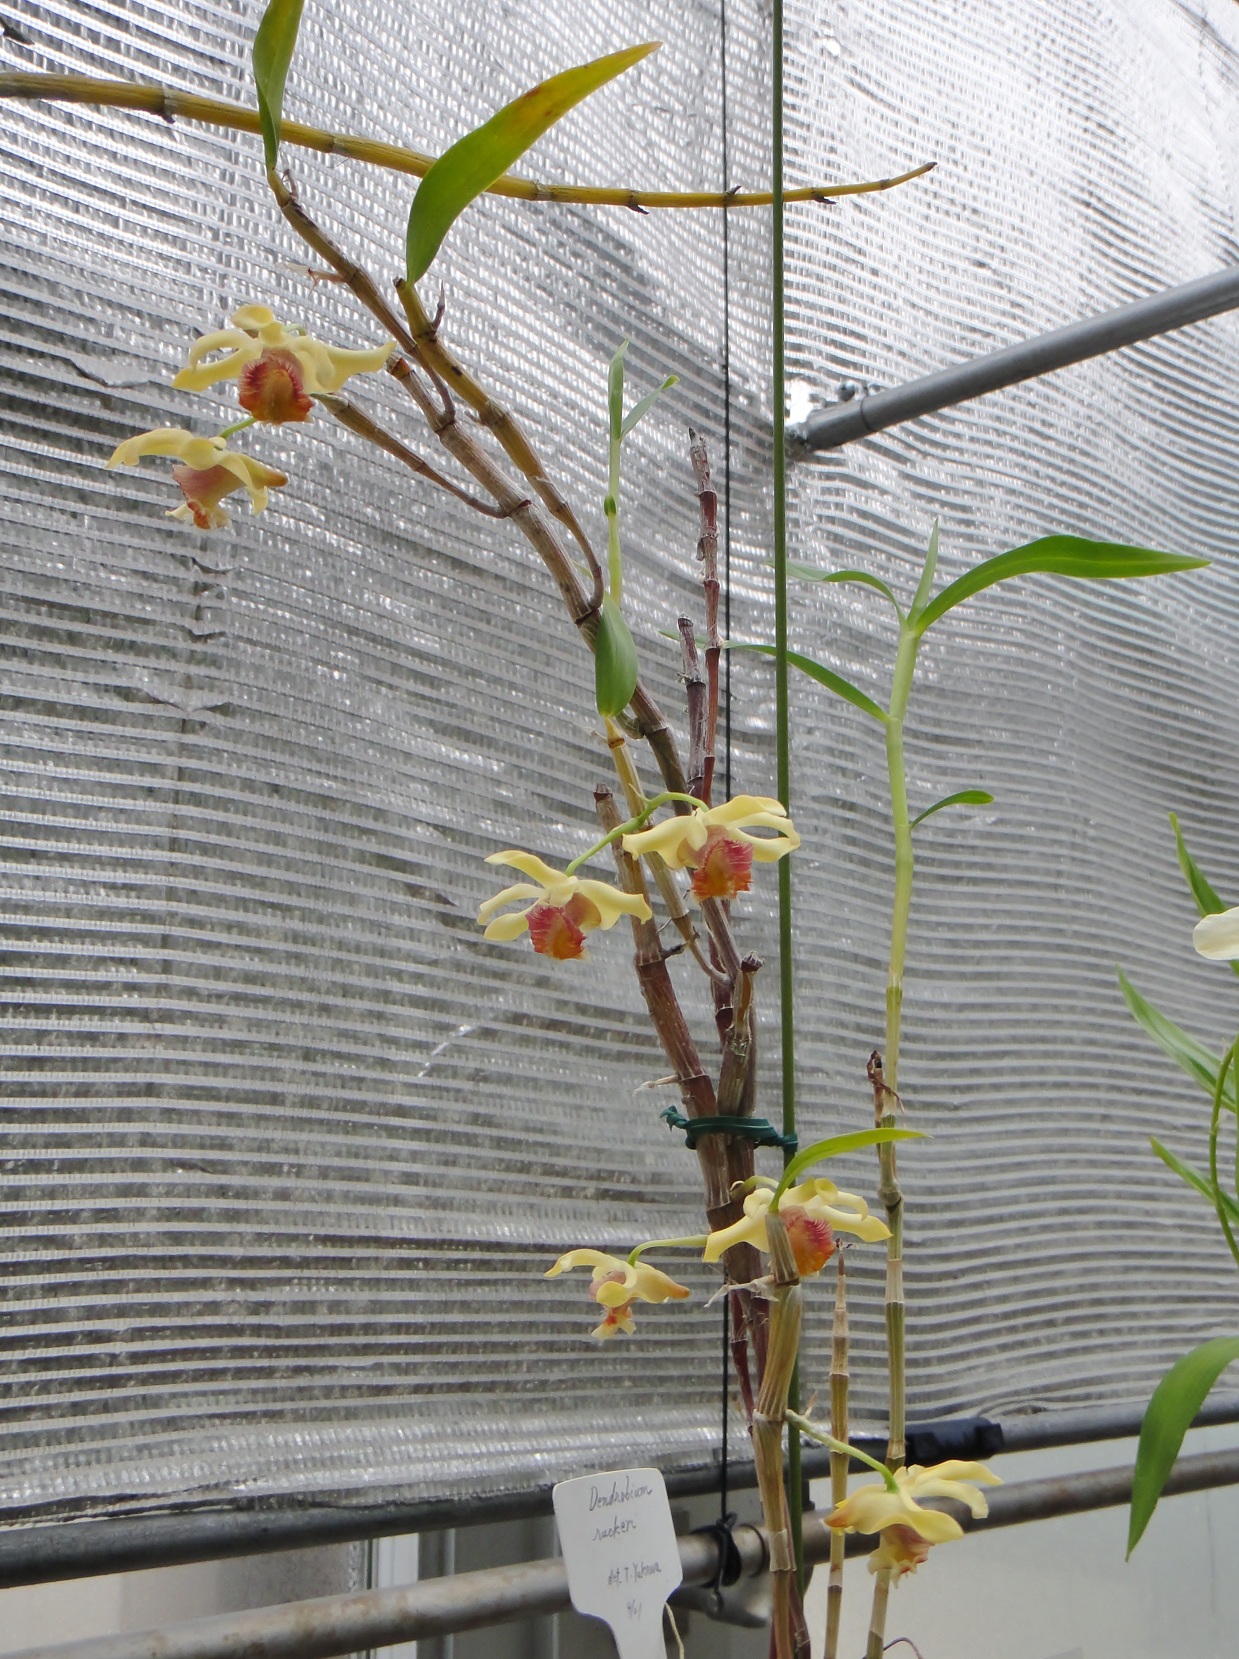 http://orchids.la.coocan.jp/Dendrobium/Dendrobium%20ruckeri/DSC03814.JPG